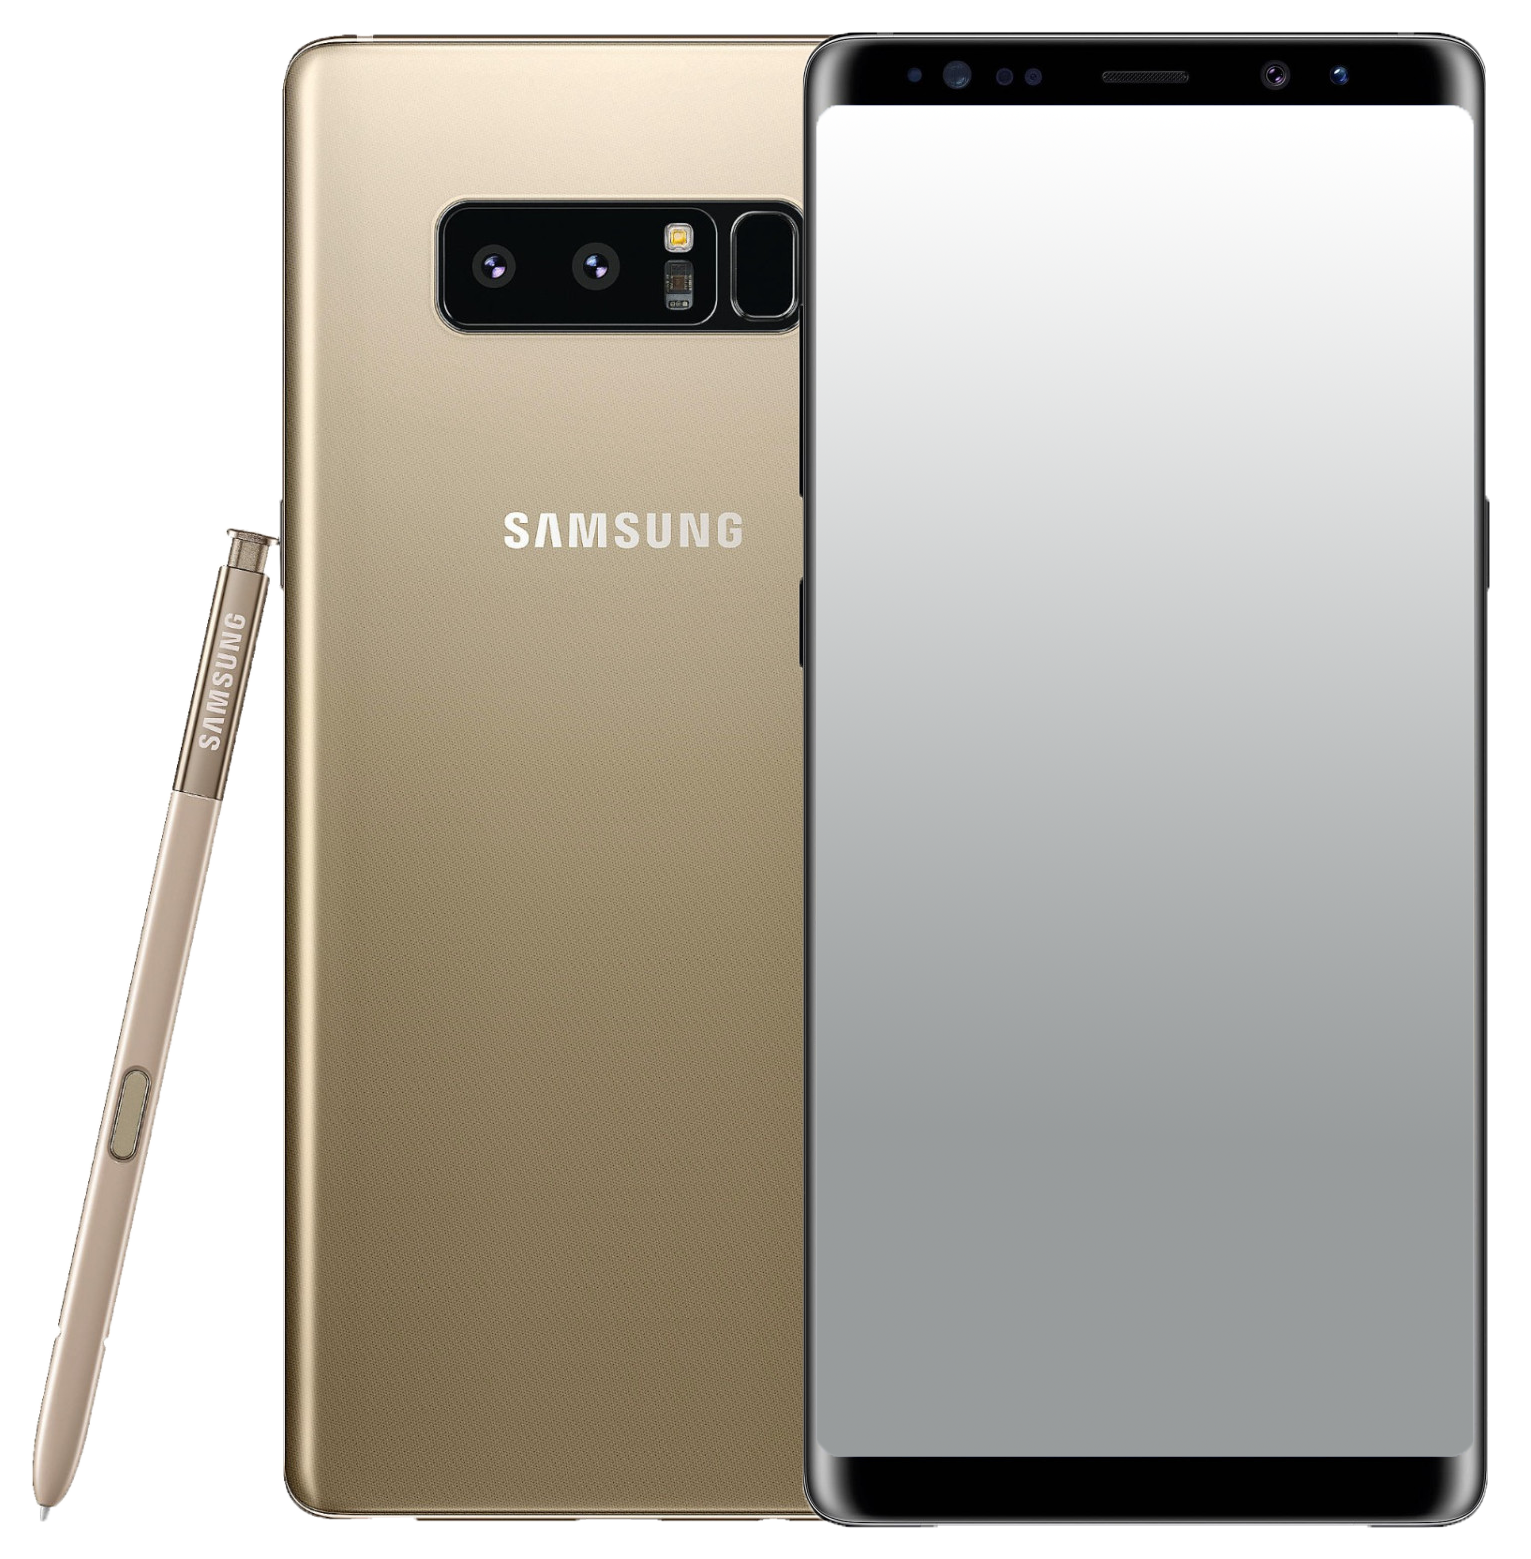 Samsung Galaxy Note 8 Dual-SIM gold - Ohne Vertrag